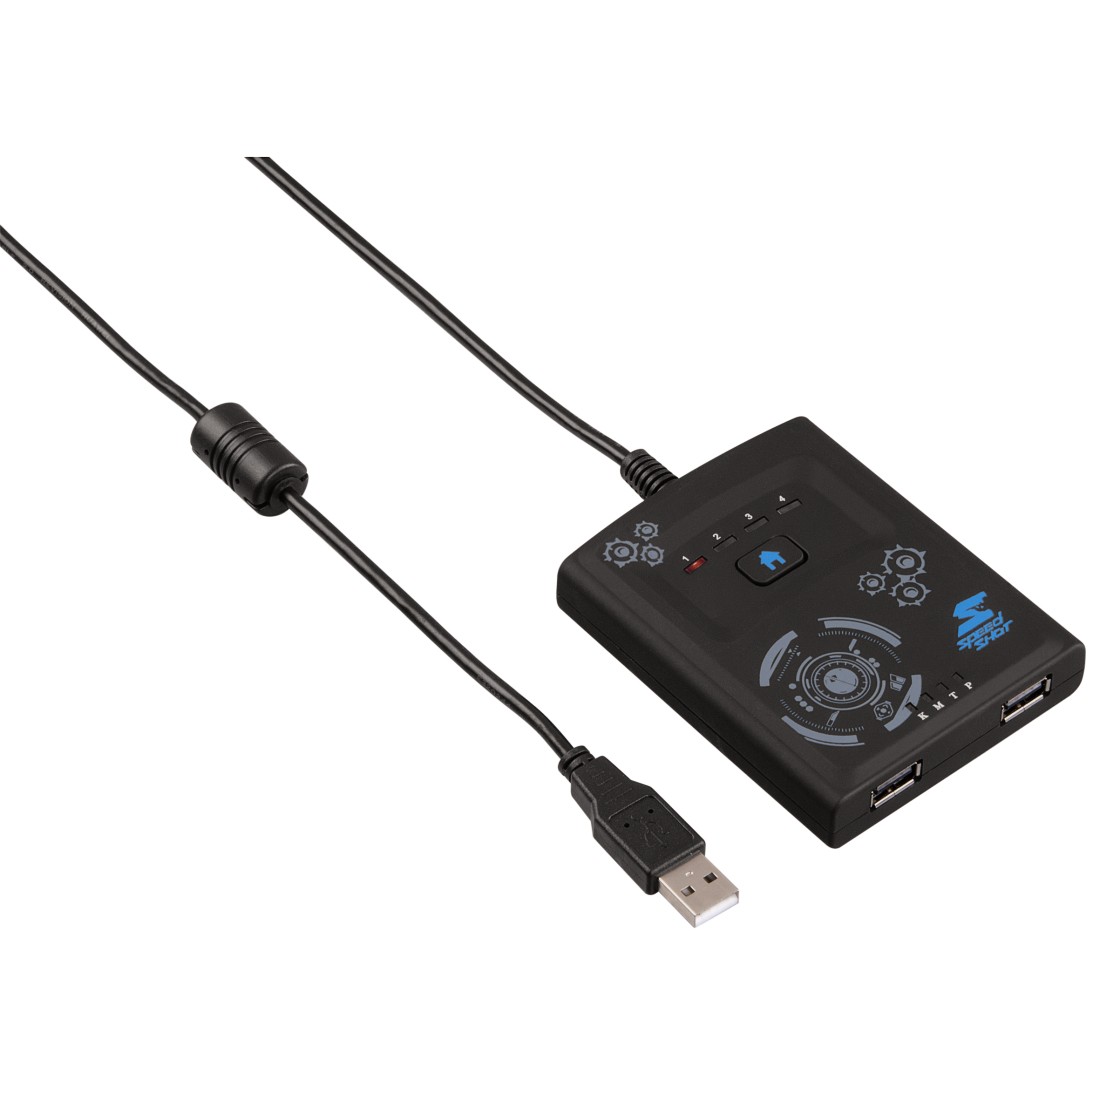 00115444 Hama "Speedshot" Mouse/Keyboard Converter for PS4